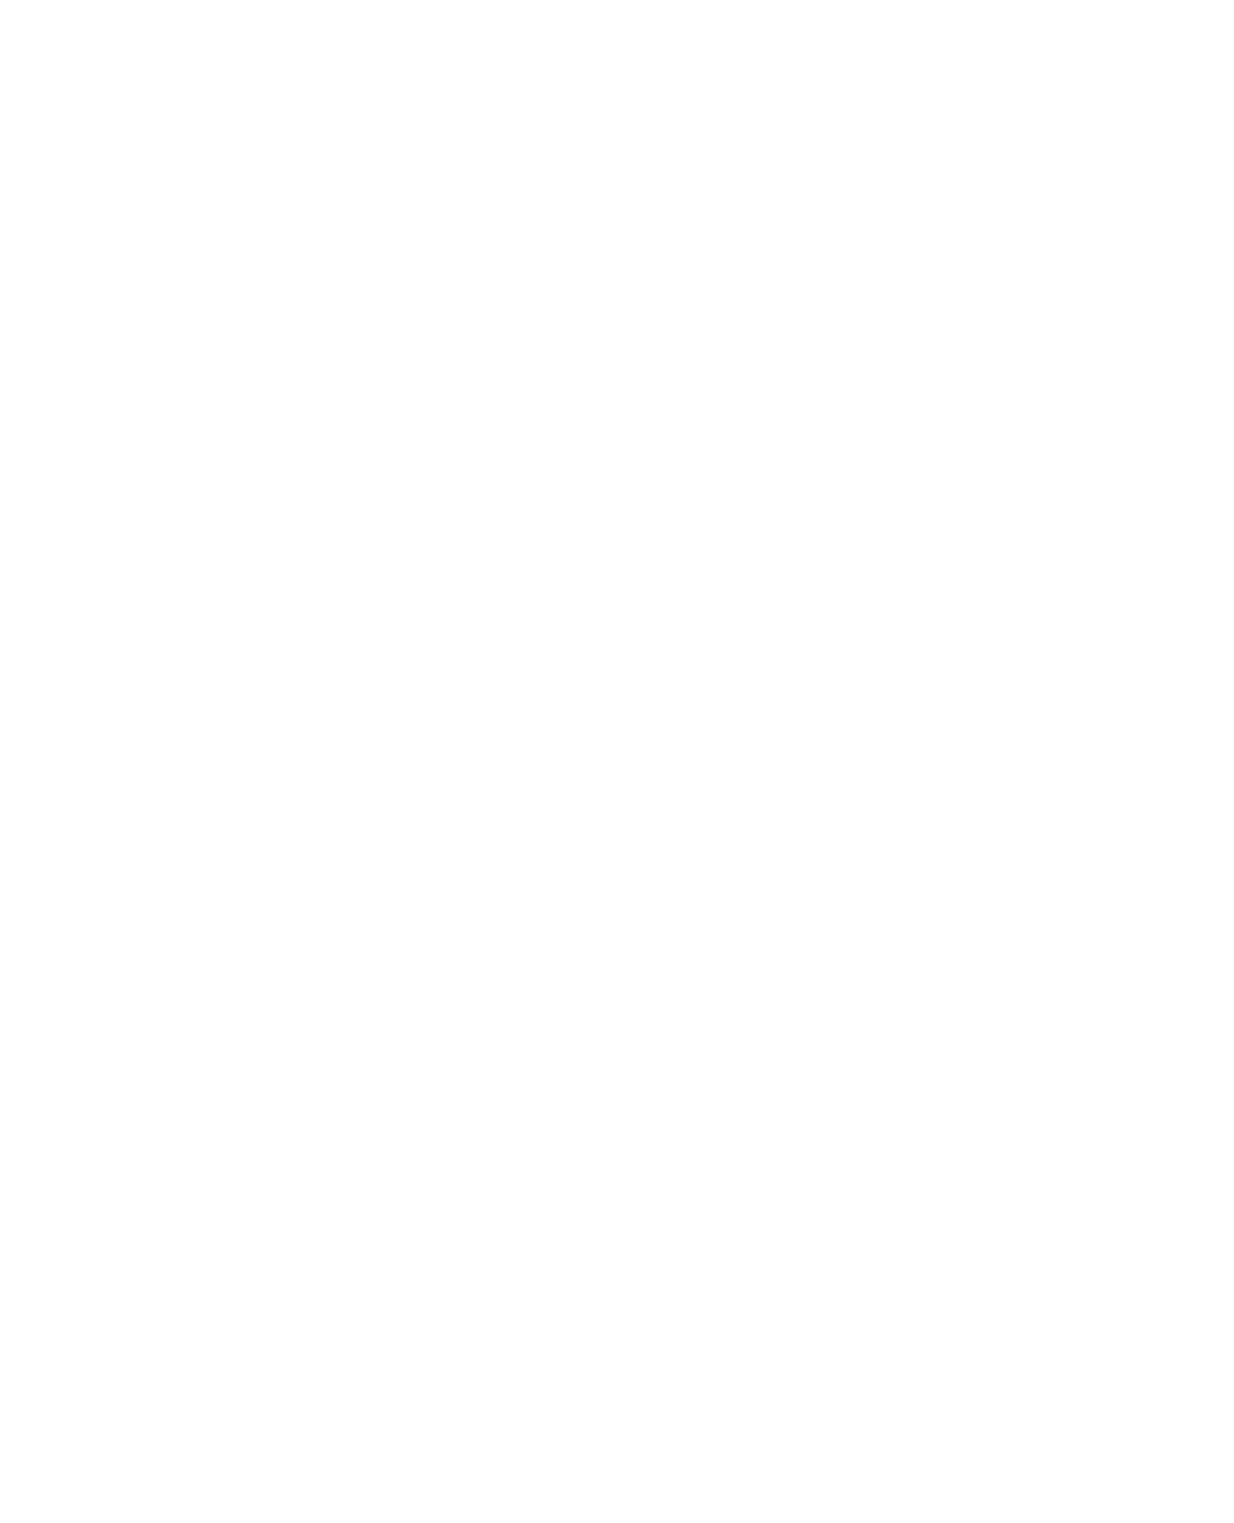 PChem (Petronas Chemicals Group) logo for dark backgrounds (transparent PNG)